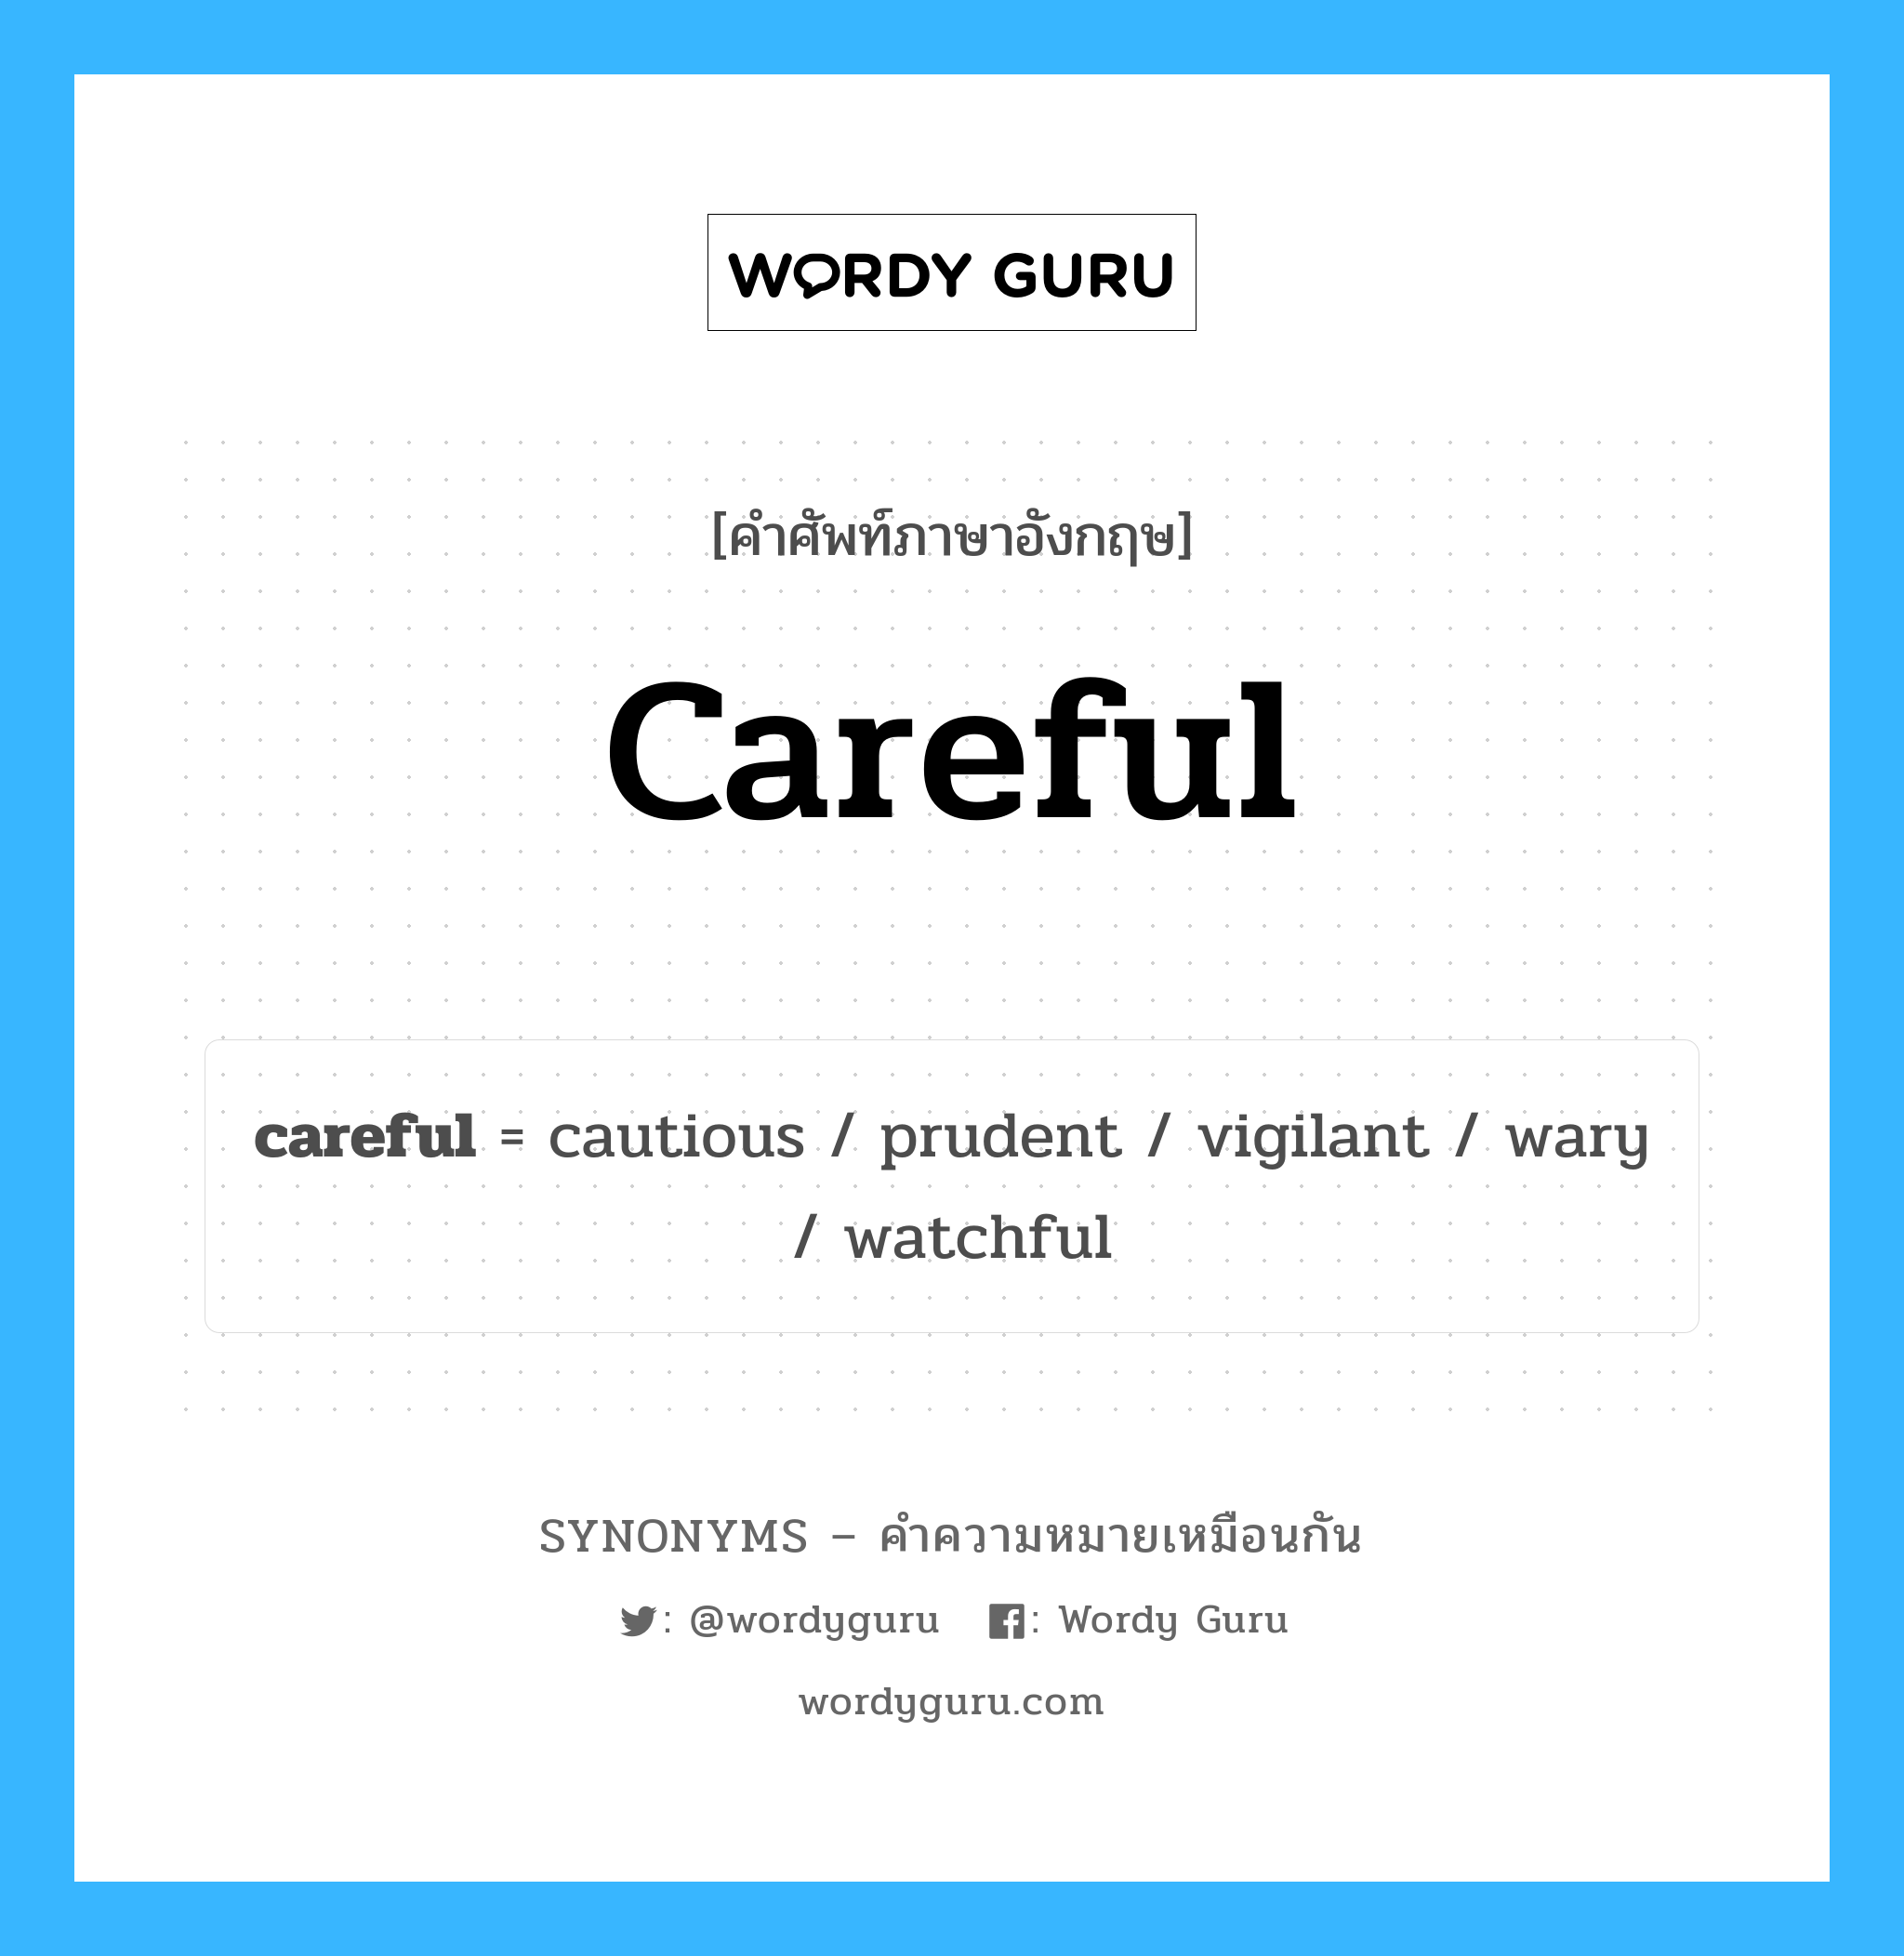 wary เป็นหนึ่งใน careful และมีคำอื่น ๆ อีกดังนี้, คำศัพท์ภาษาอังกฤษ wary ความหมายคล้ายกันกับ careful แปลว่า ระมัดระวัง หมวด careful